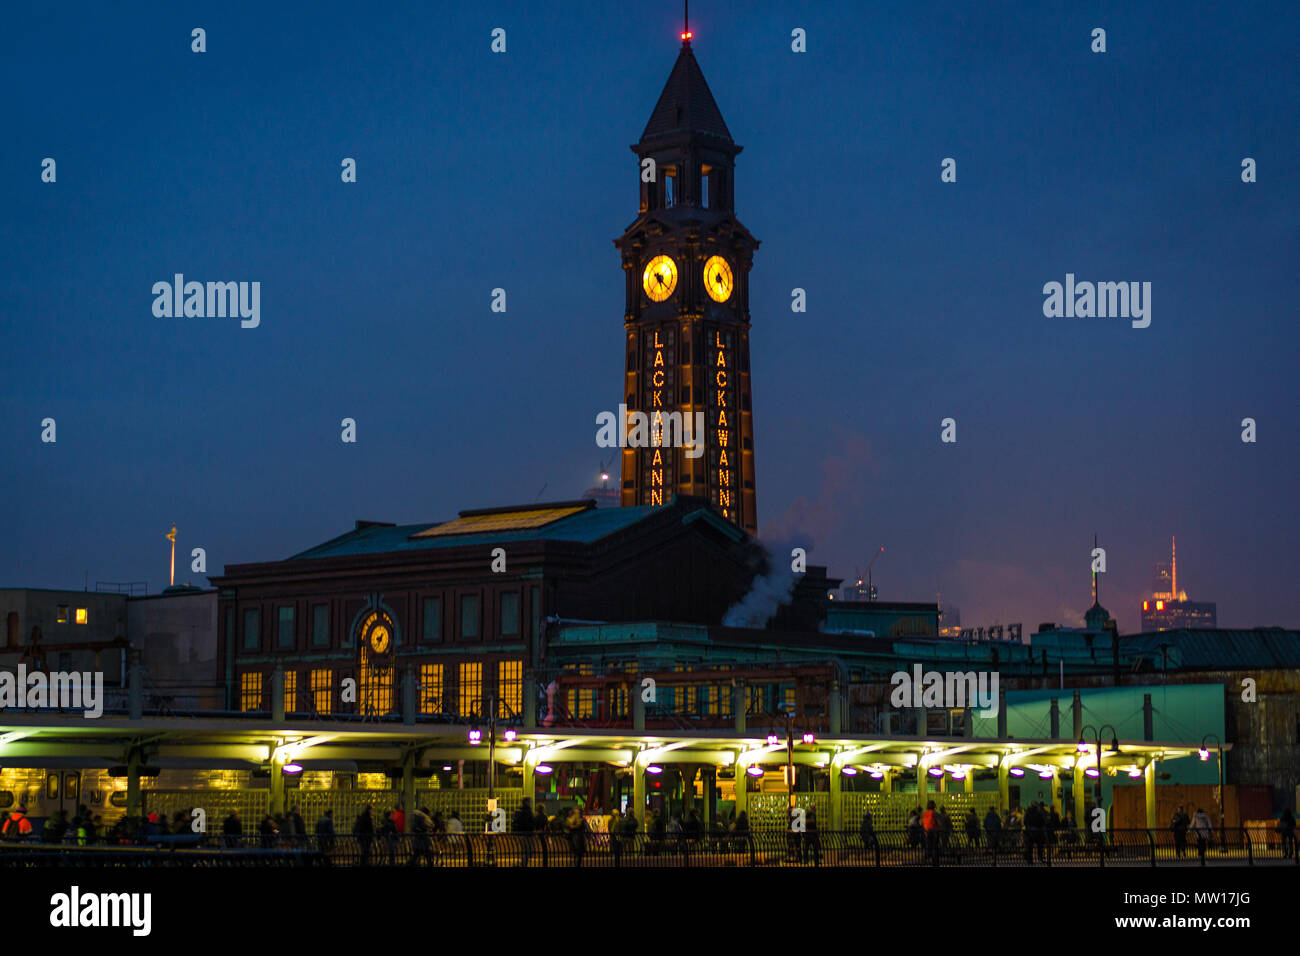 Tour de l'horloge de la gare d'Hoboken lit up at night Banque D'Images